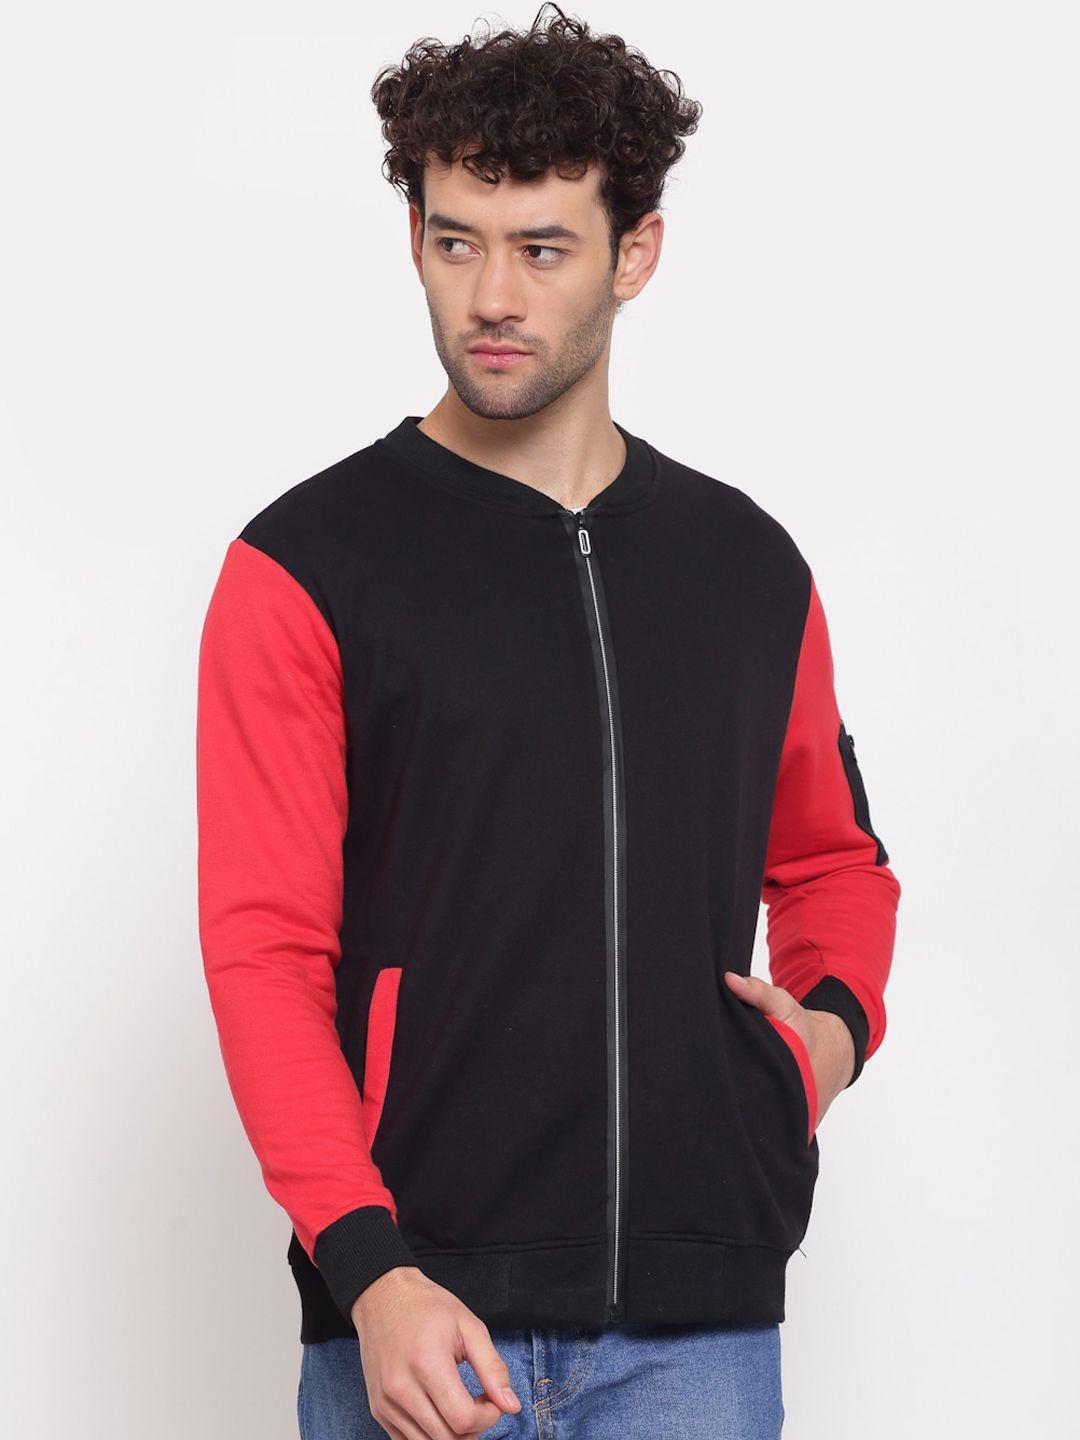 pause sport men black red colourblocked fleece lightweight antimicrobial bomber jacket